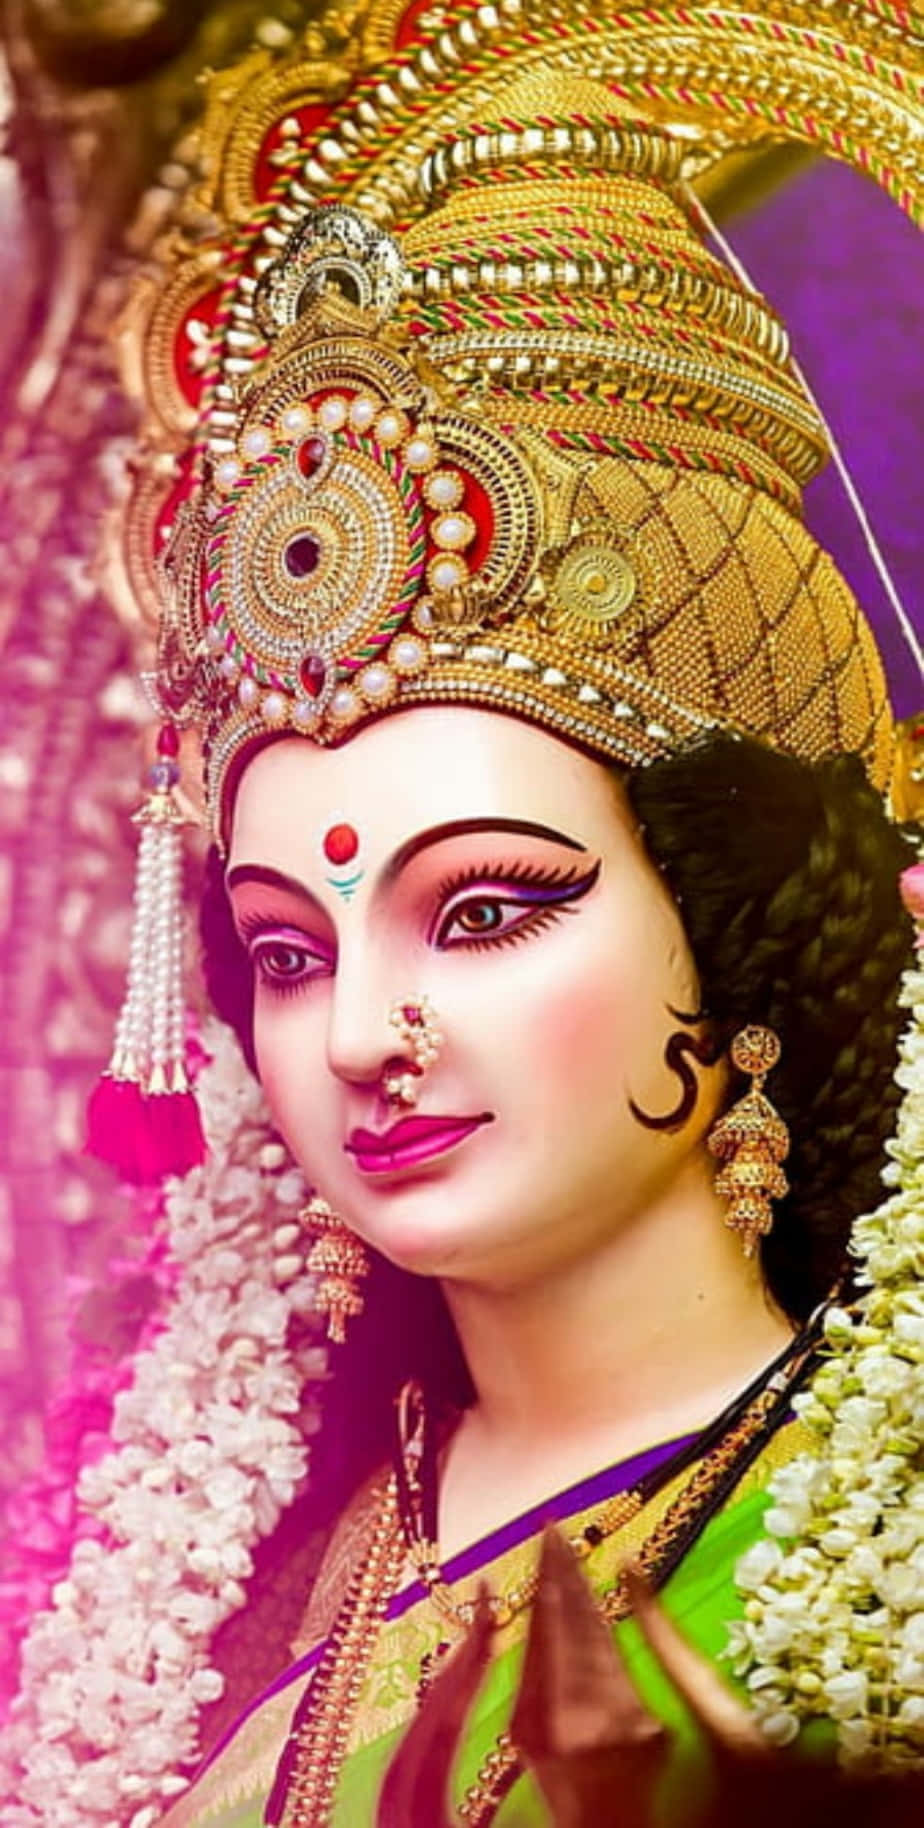 Durgamaa Gesichtsfigur Bild